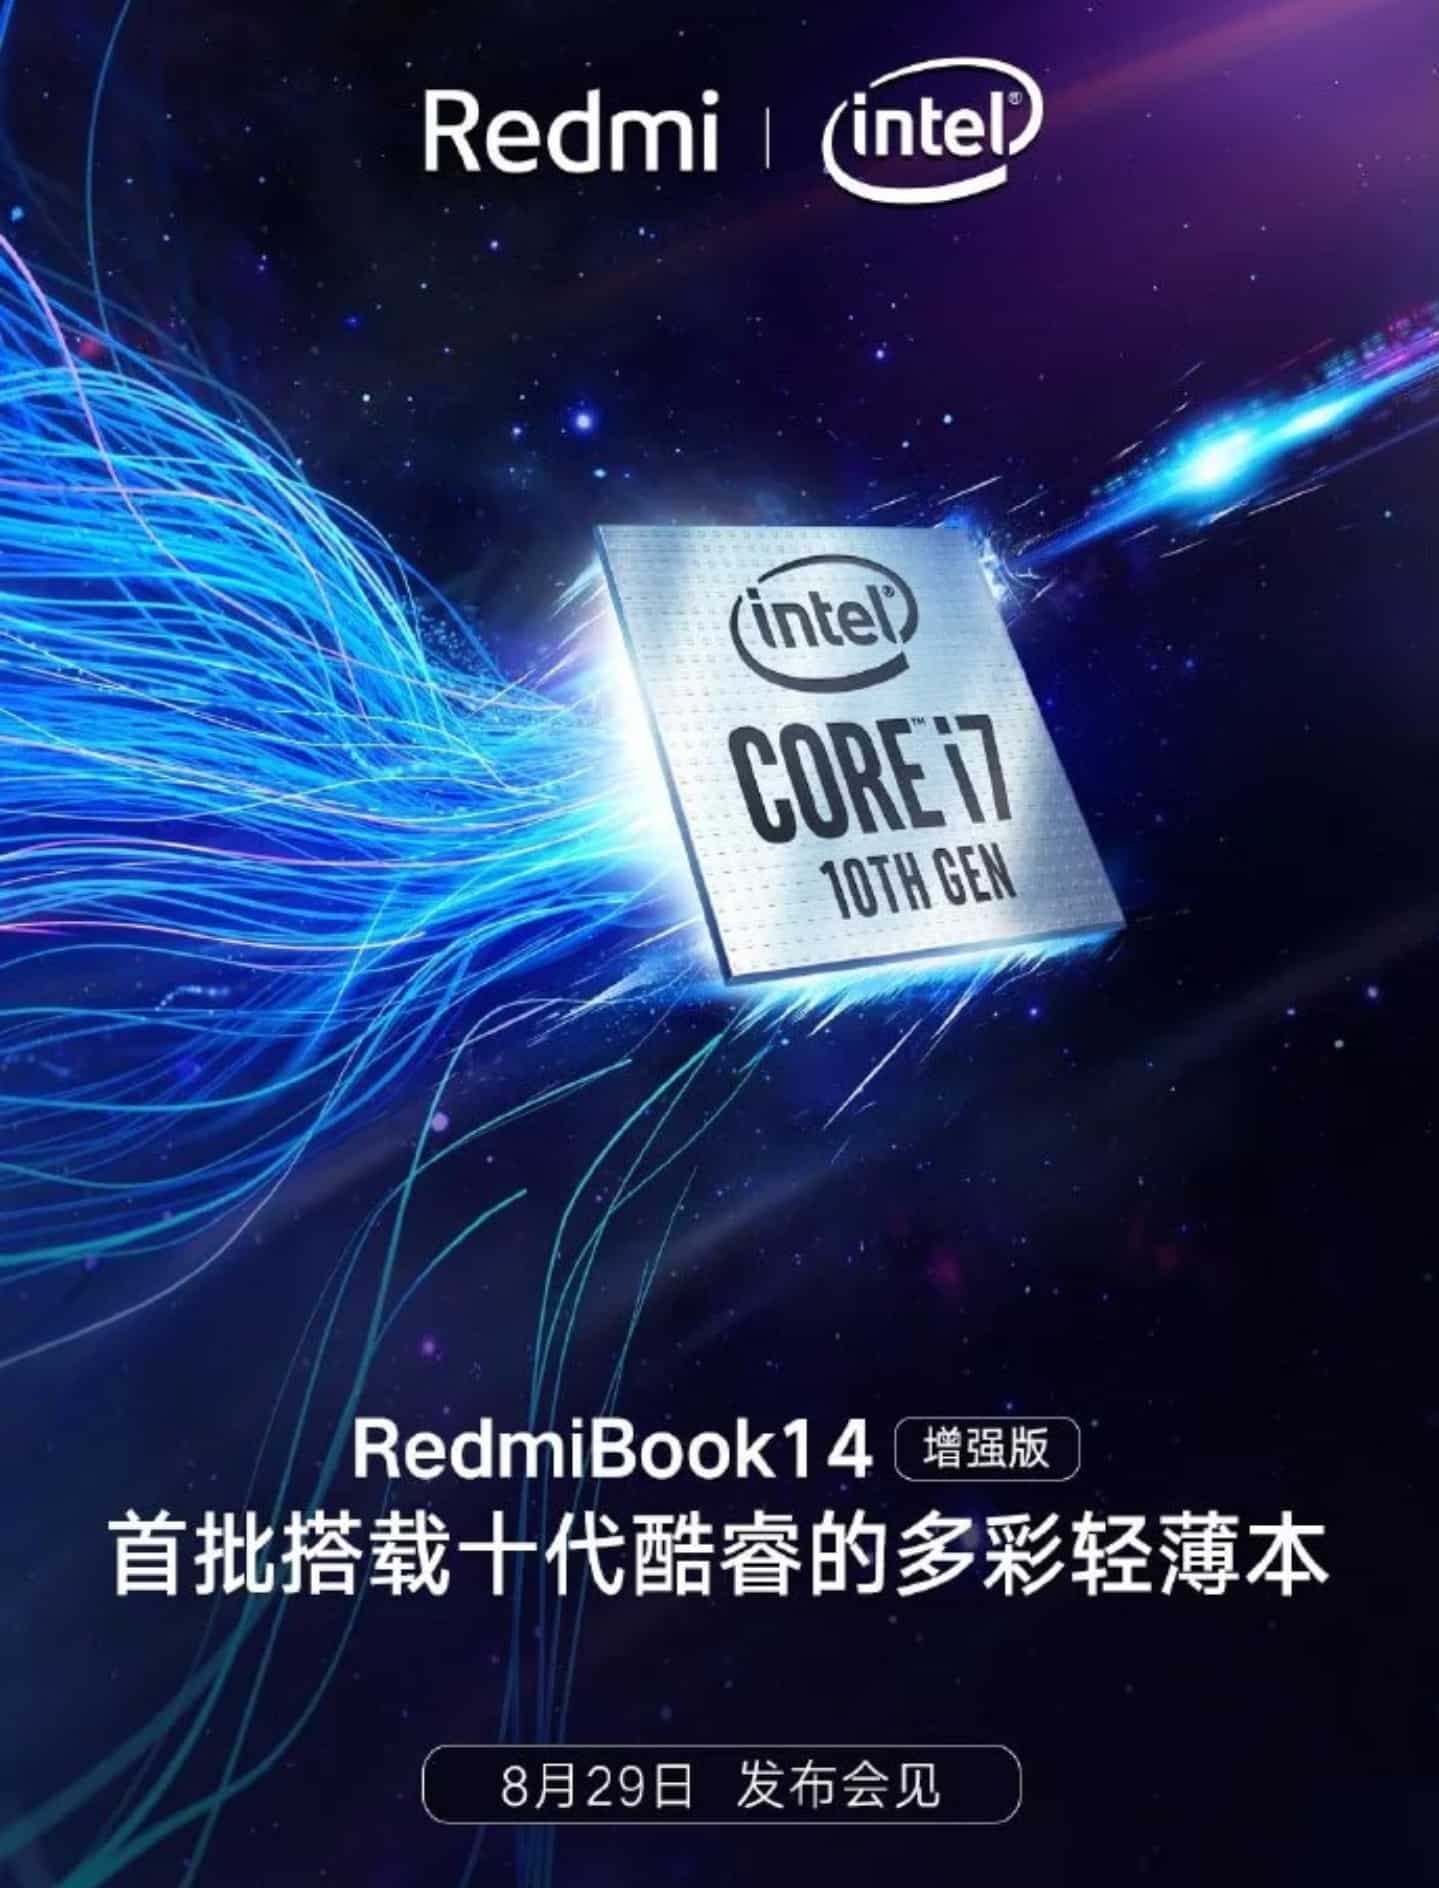 Redmibook 14 intel procesor